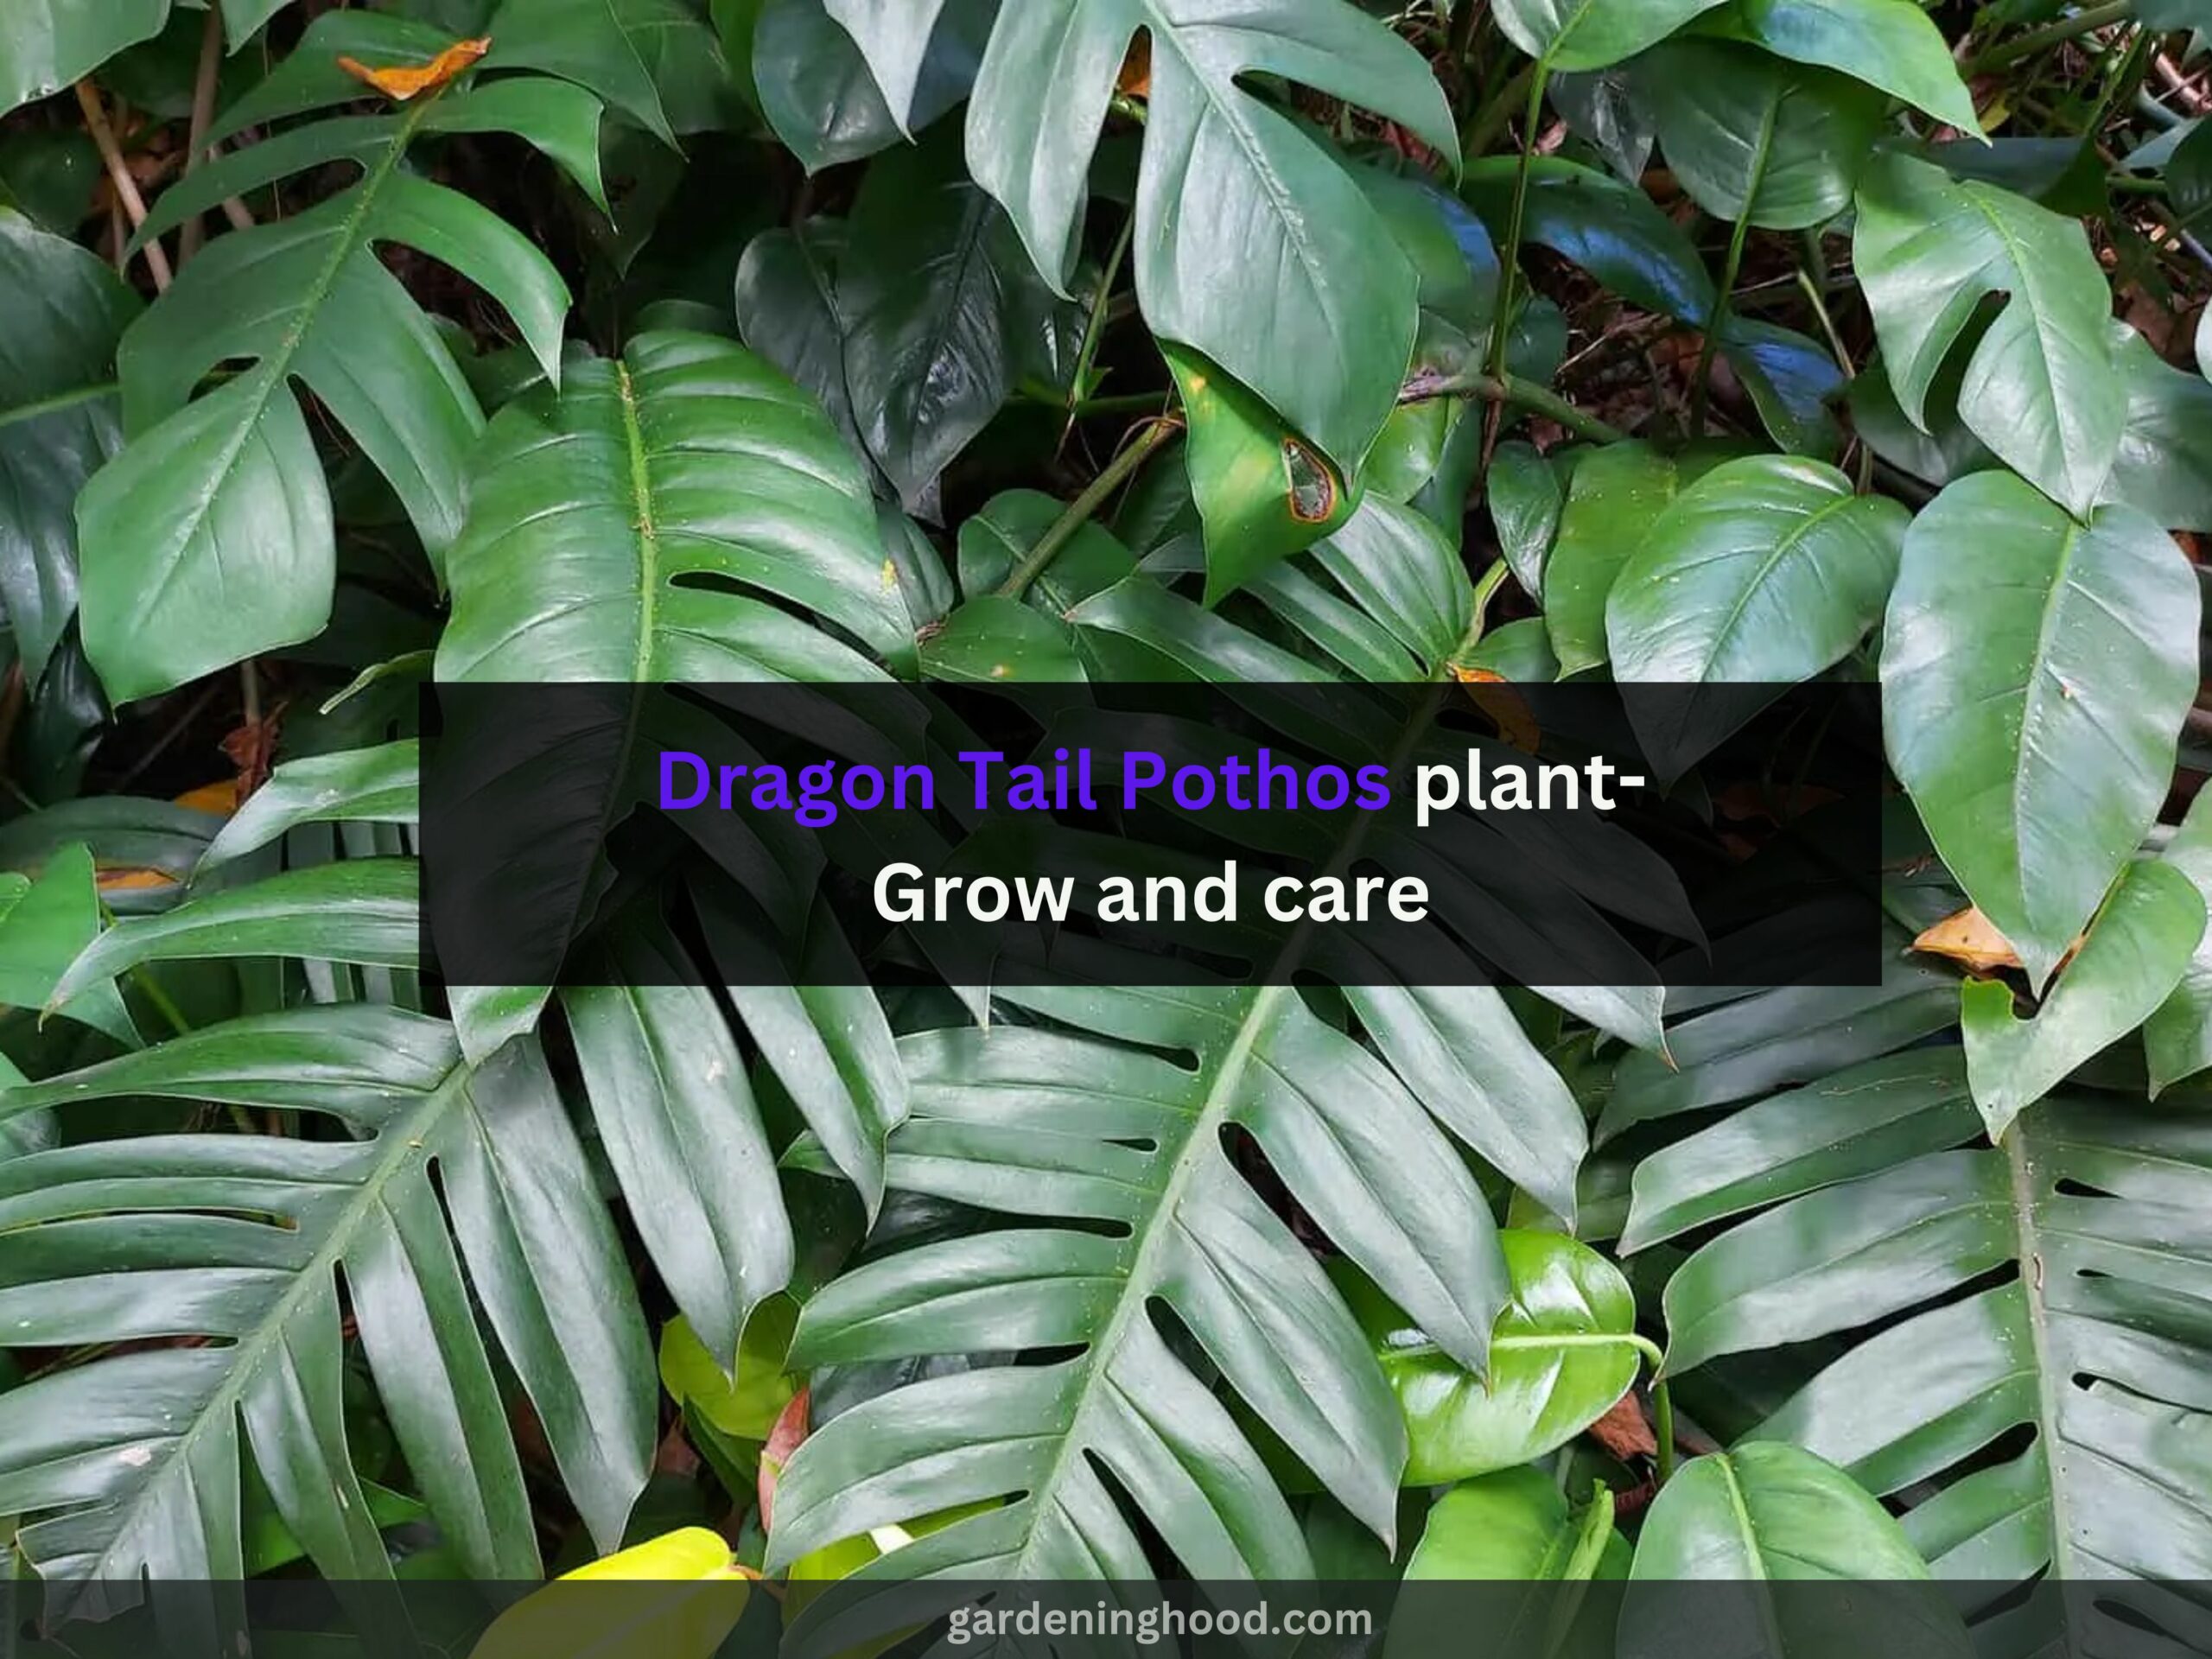 Dragon Tail Pothos plant- Grow and care